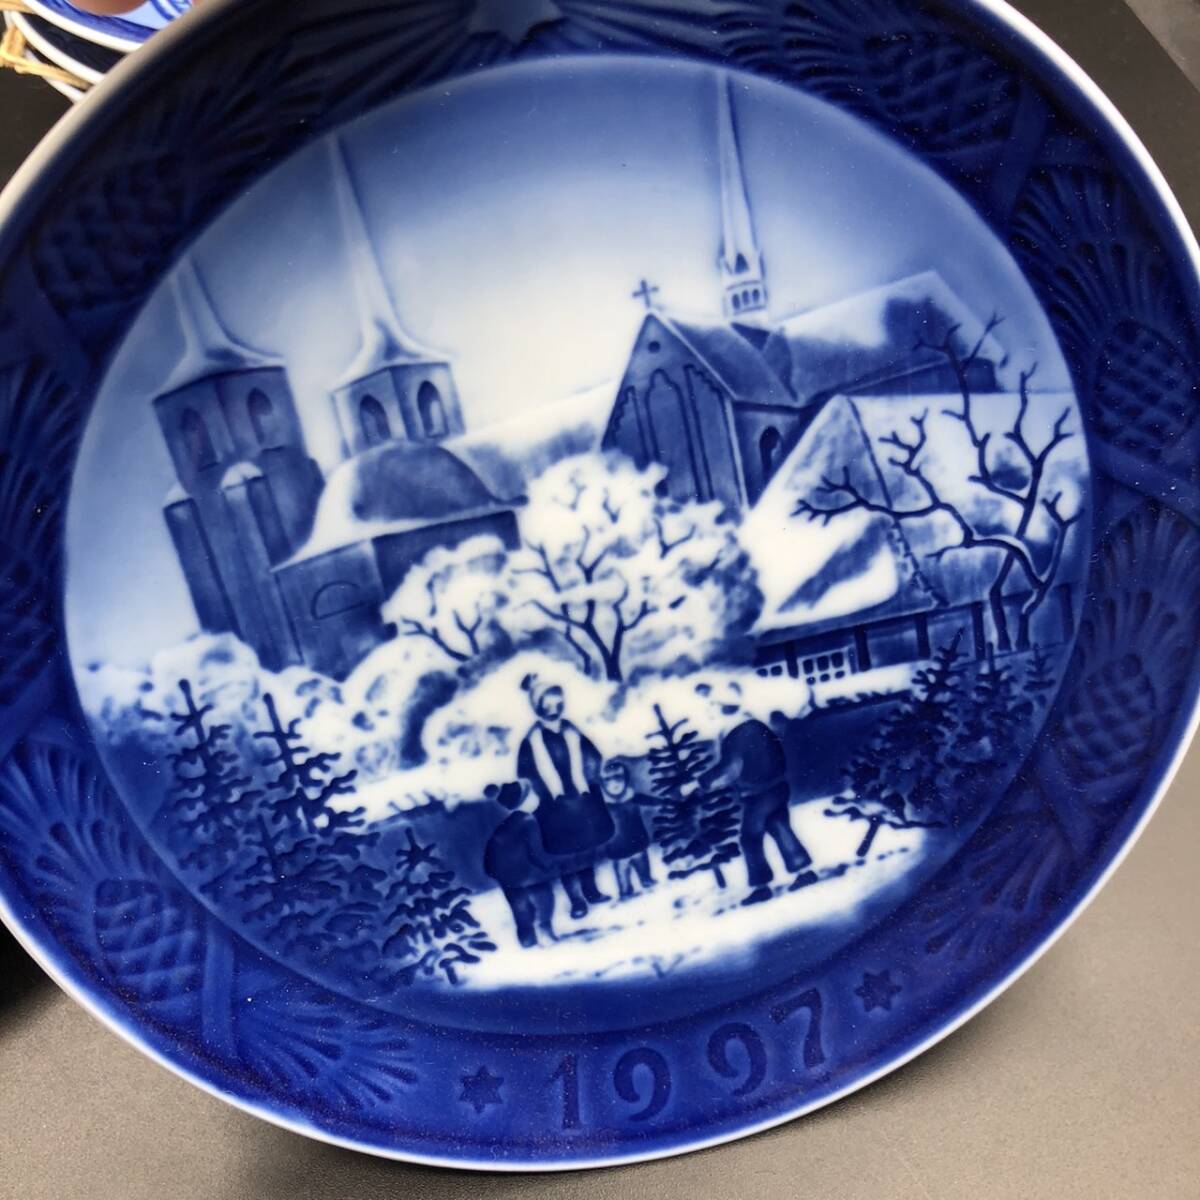 N)◎ロイヤルコペンハーゲン 1996 イヤープレート 飾り皿 洋食器 陶磁器 青 ブルー ブランド ROYAL COPENHAGEN◎ P0204_画像6